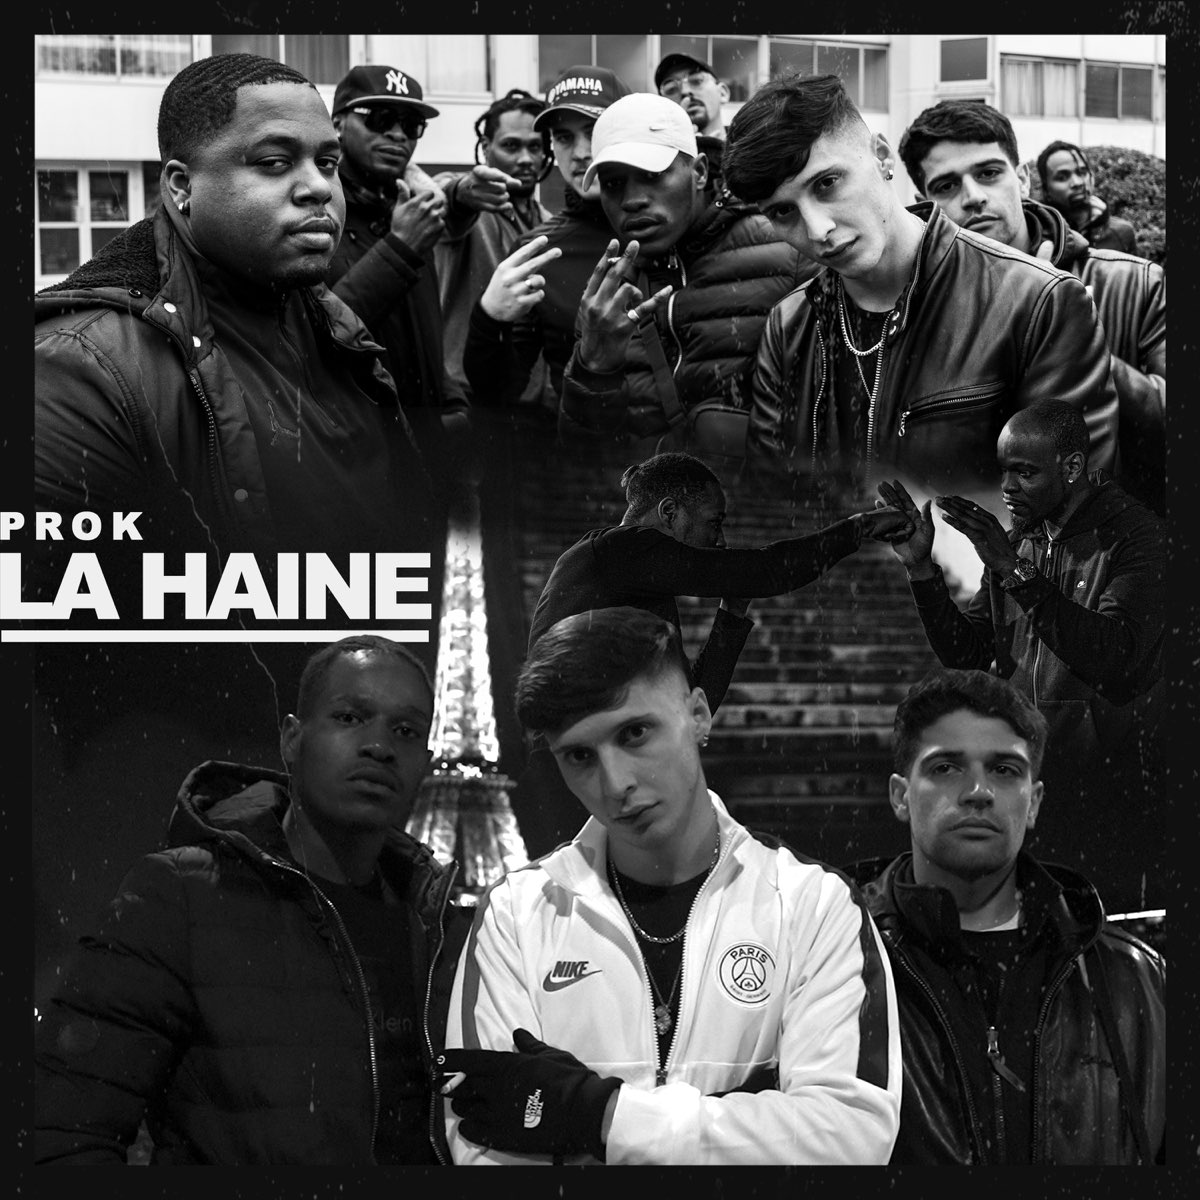 La haine - Single by Ayax y Prok on Apple Music